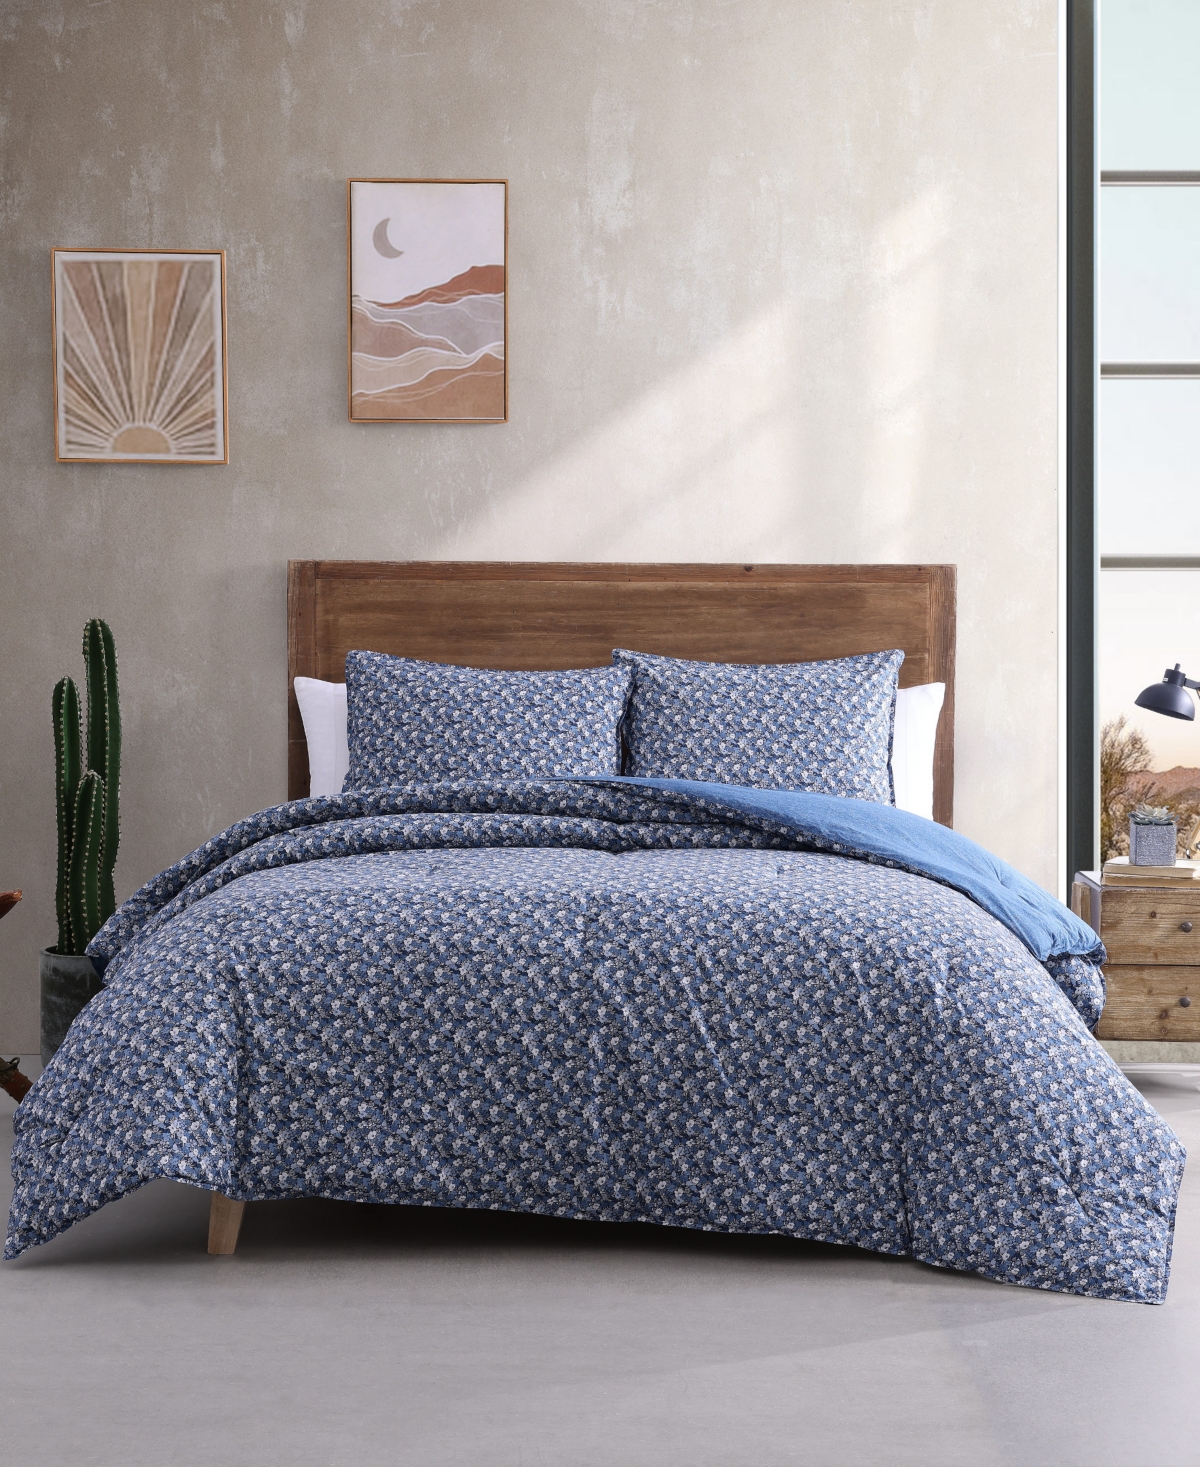 Wrangler Prairie Floral 3 Piece Comforter Set, Full/queen Bedding In Denim Blue